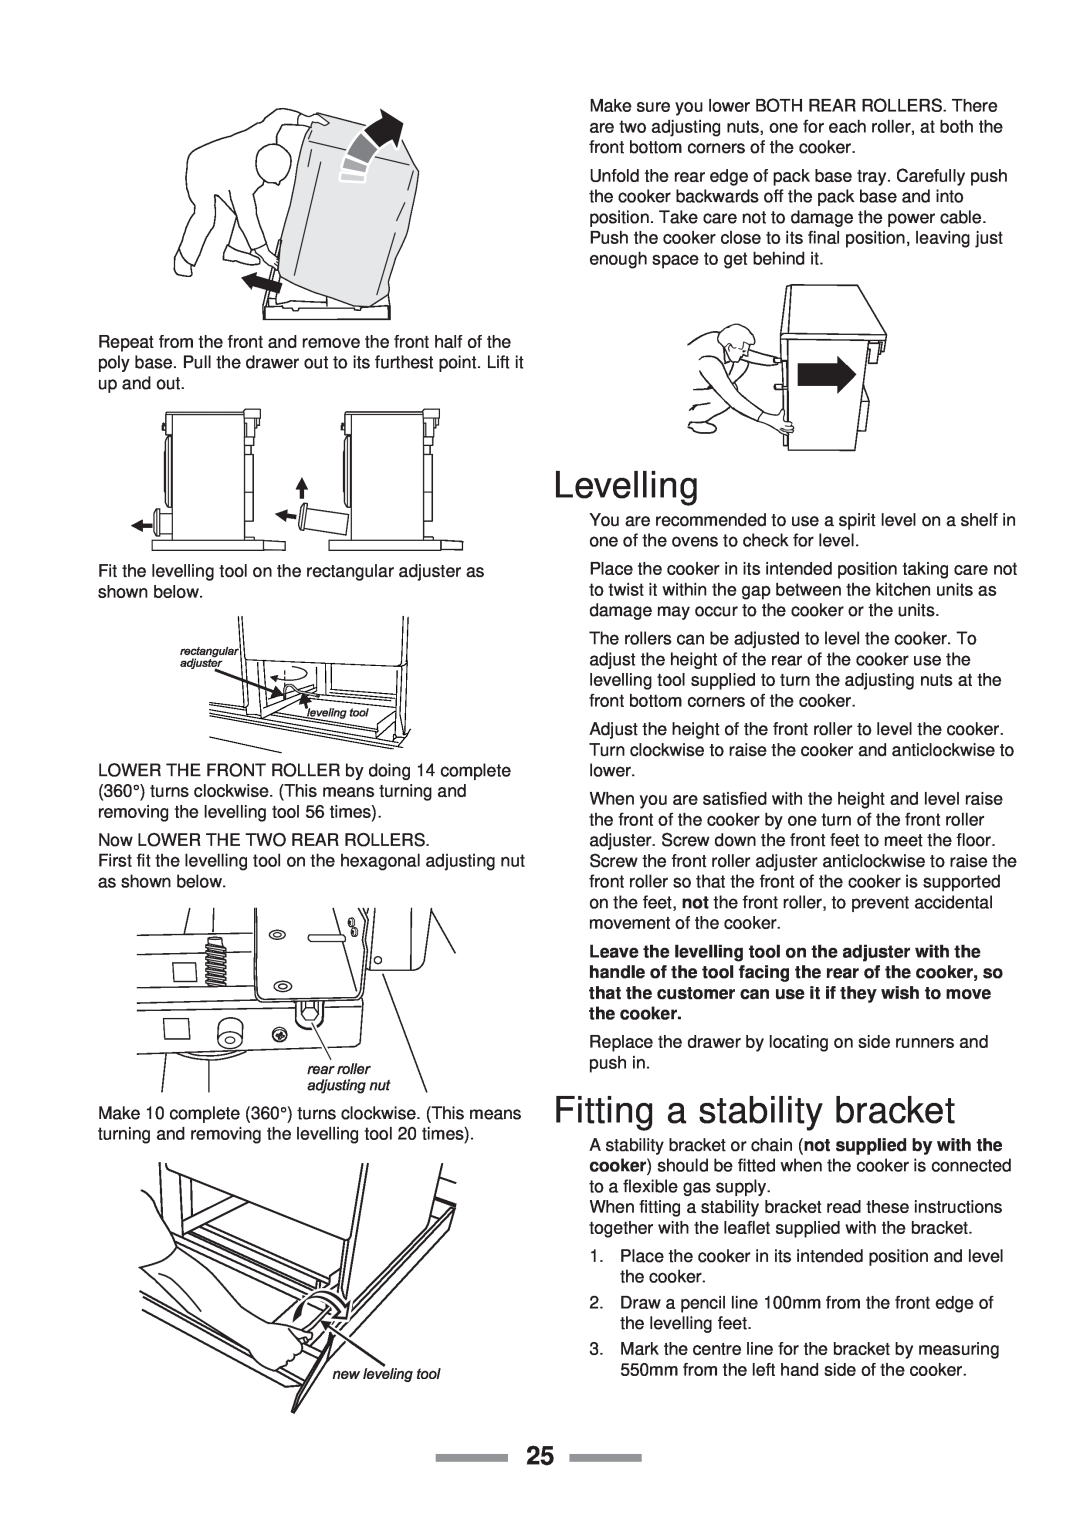 Rangemaster 110 installation instructions Levelling, Fitting a stability bracket 